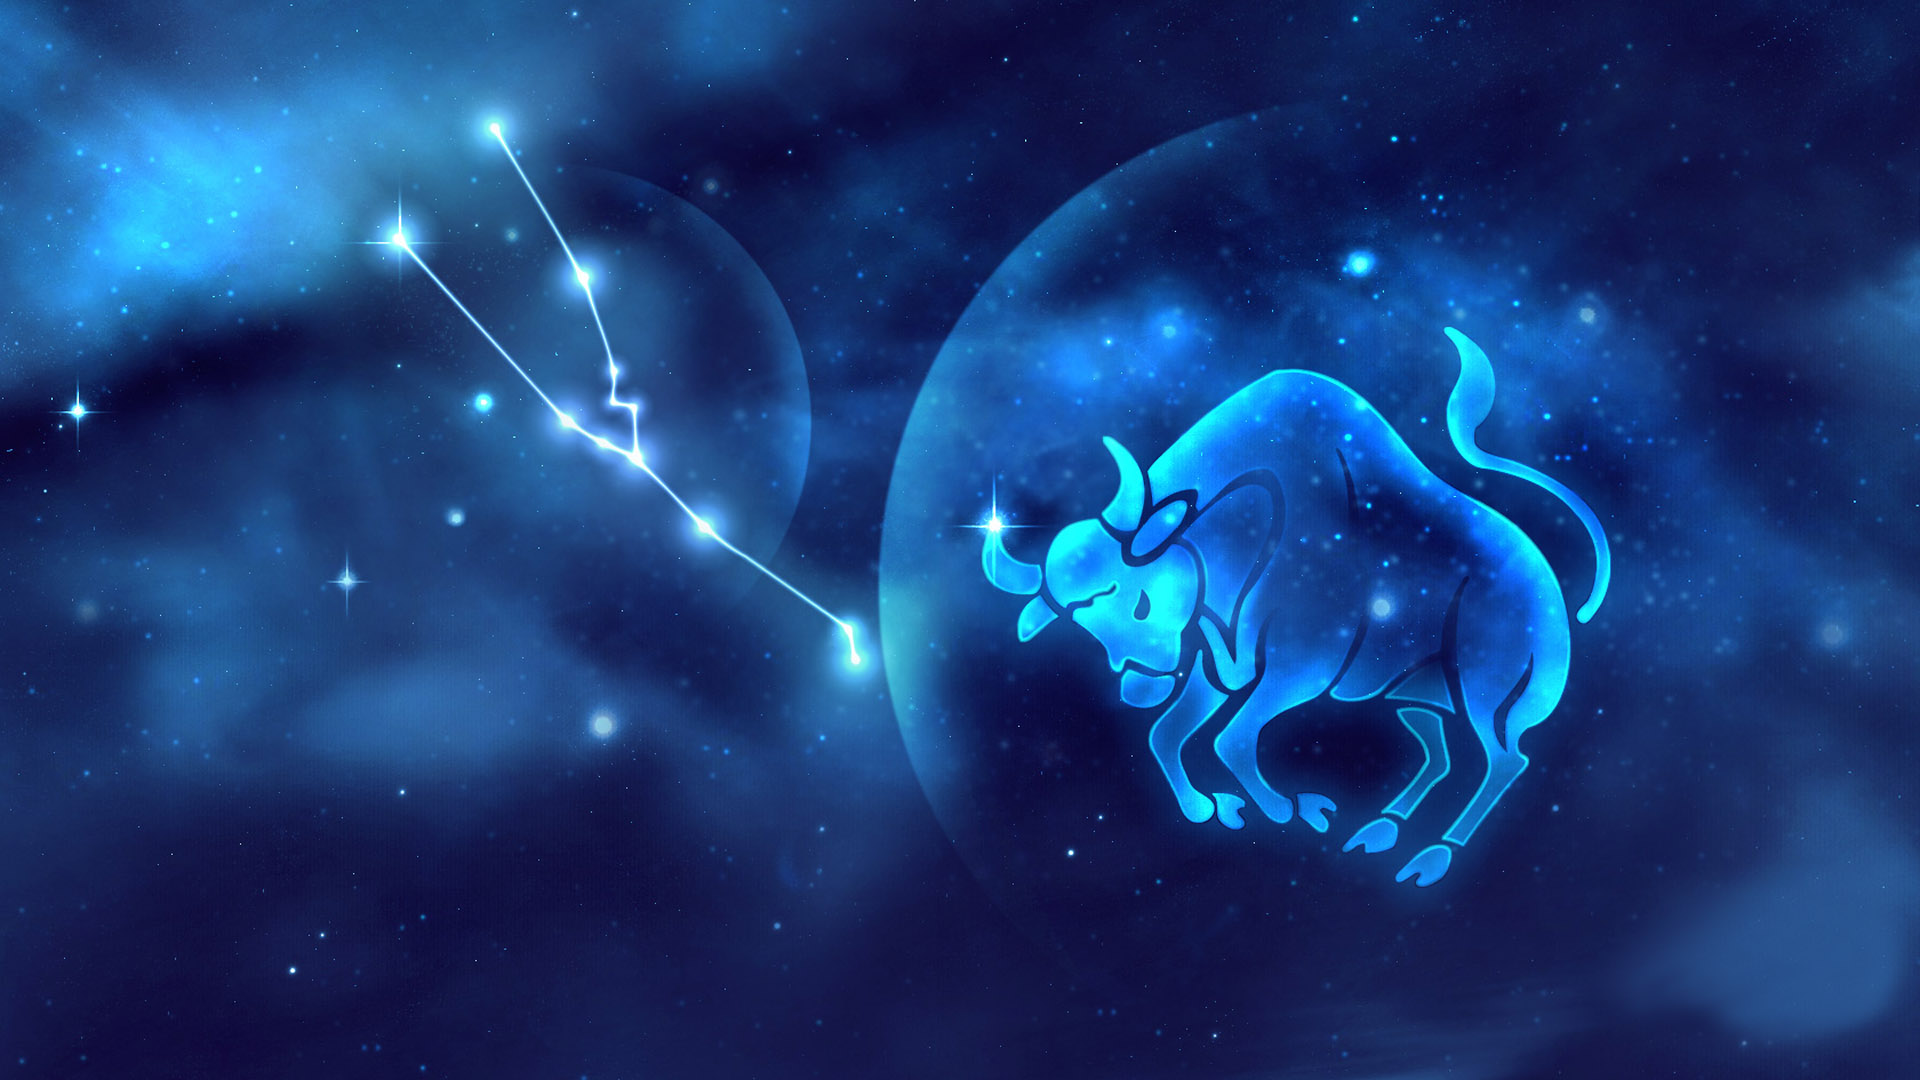 Taurus March Horoscope 2017